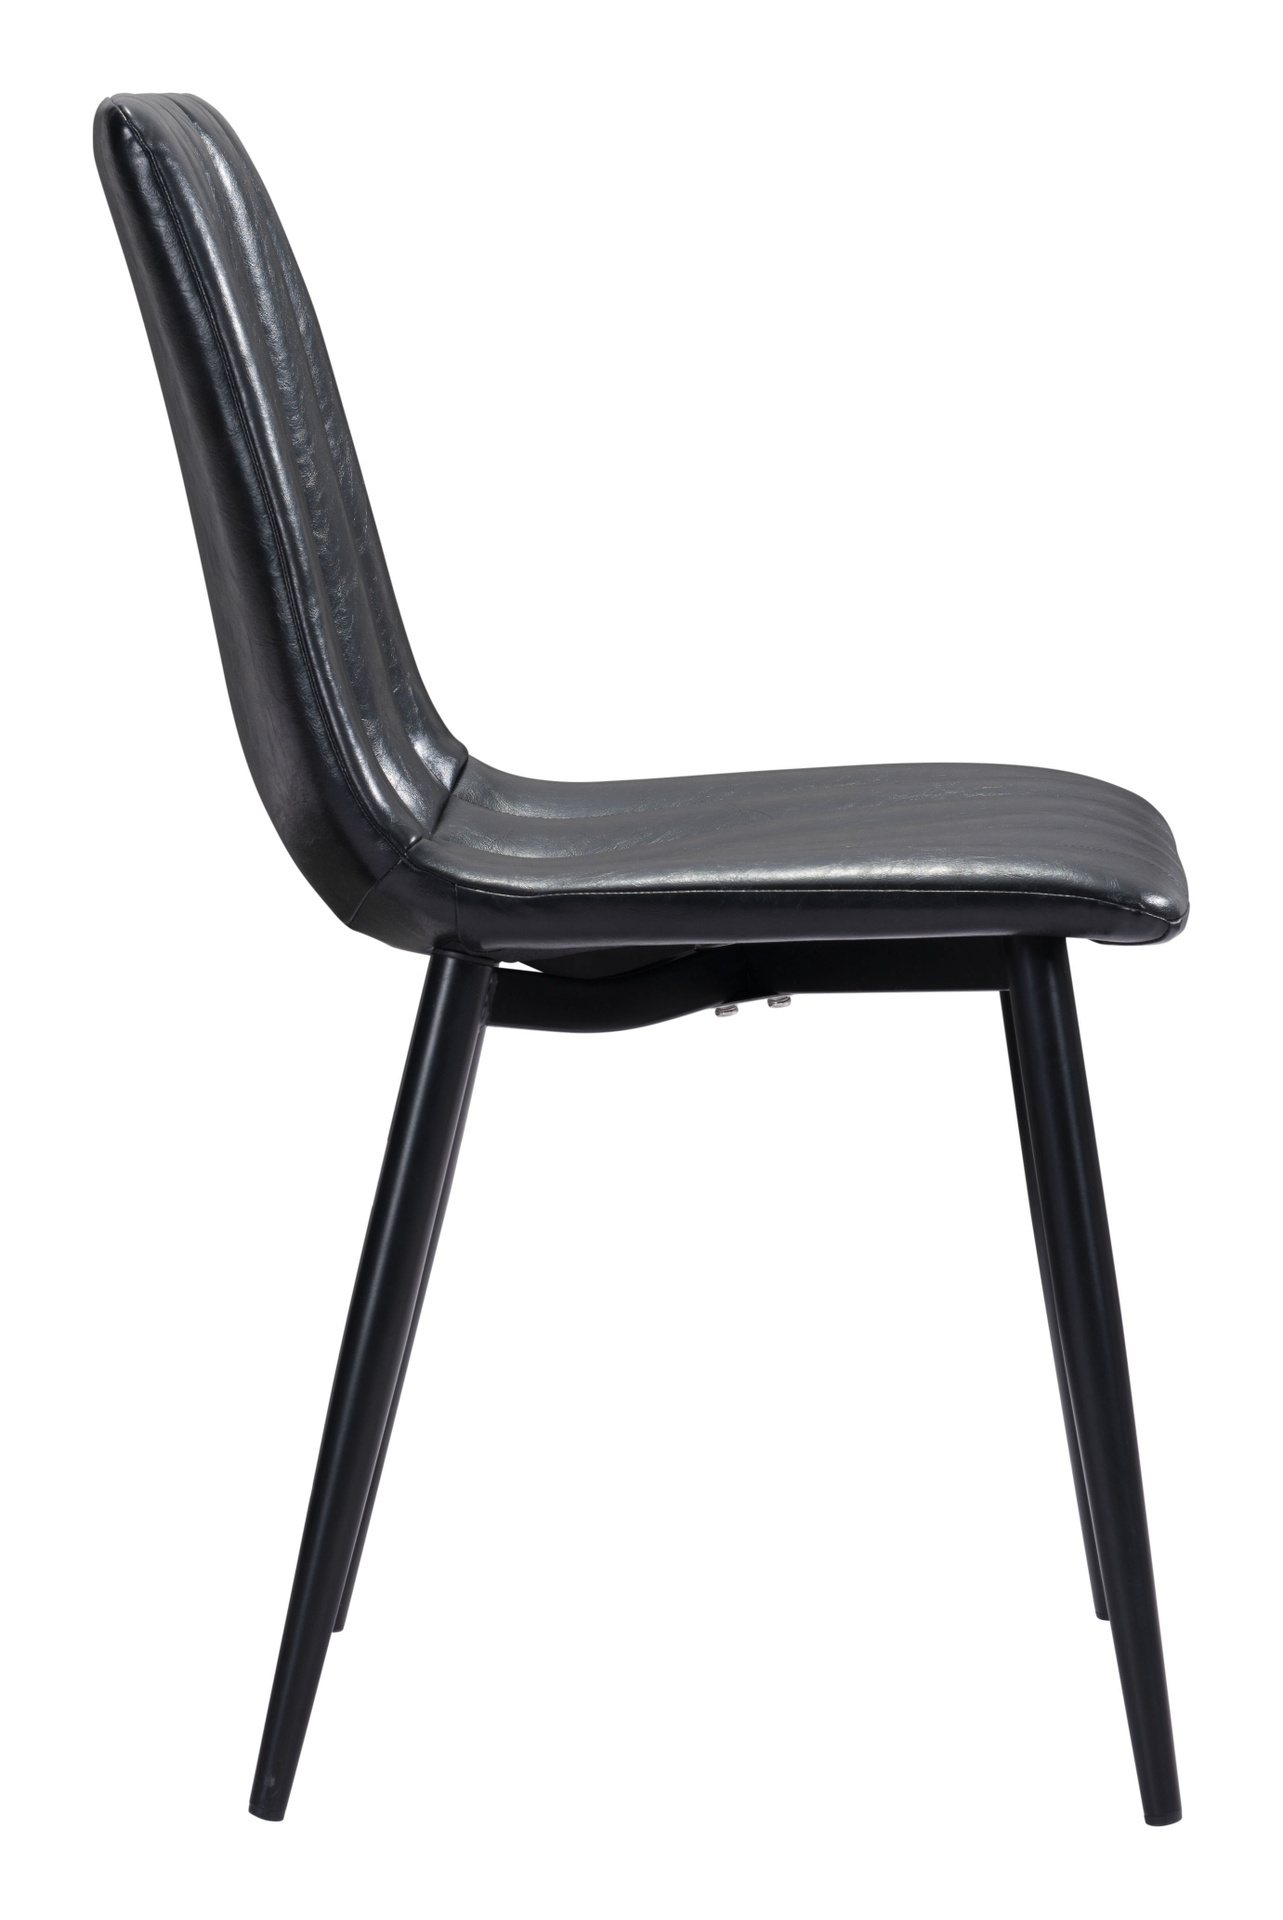 Chell silla negra // MS_4